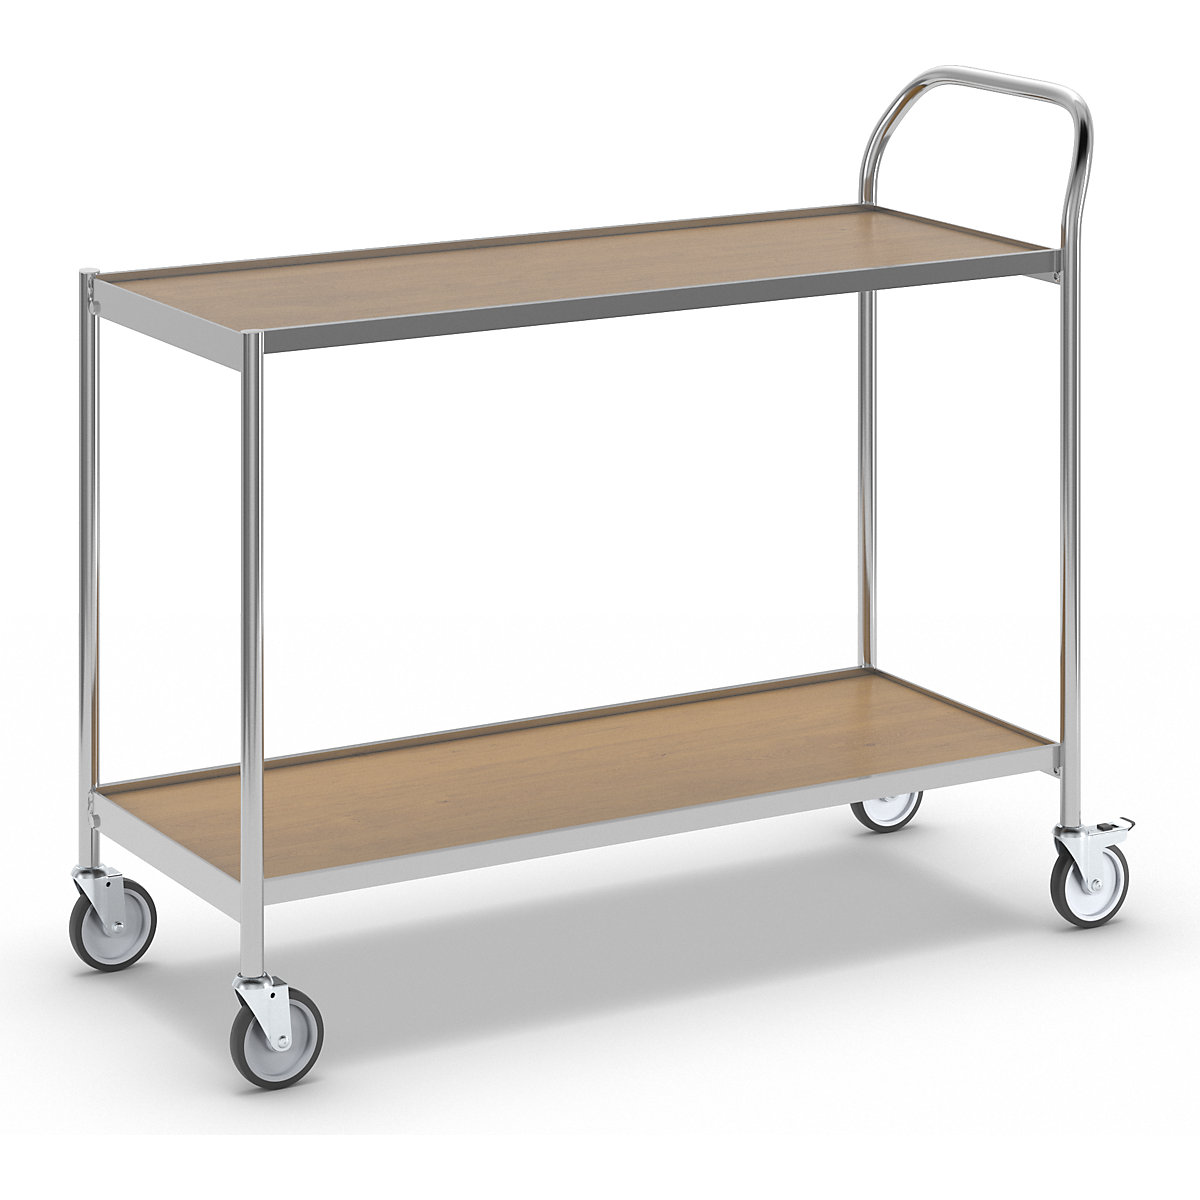 Stolový vozík – HelgeNyberg, 2 etáže, d x š 1000 x 420 mm, chrom / dub-3